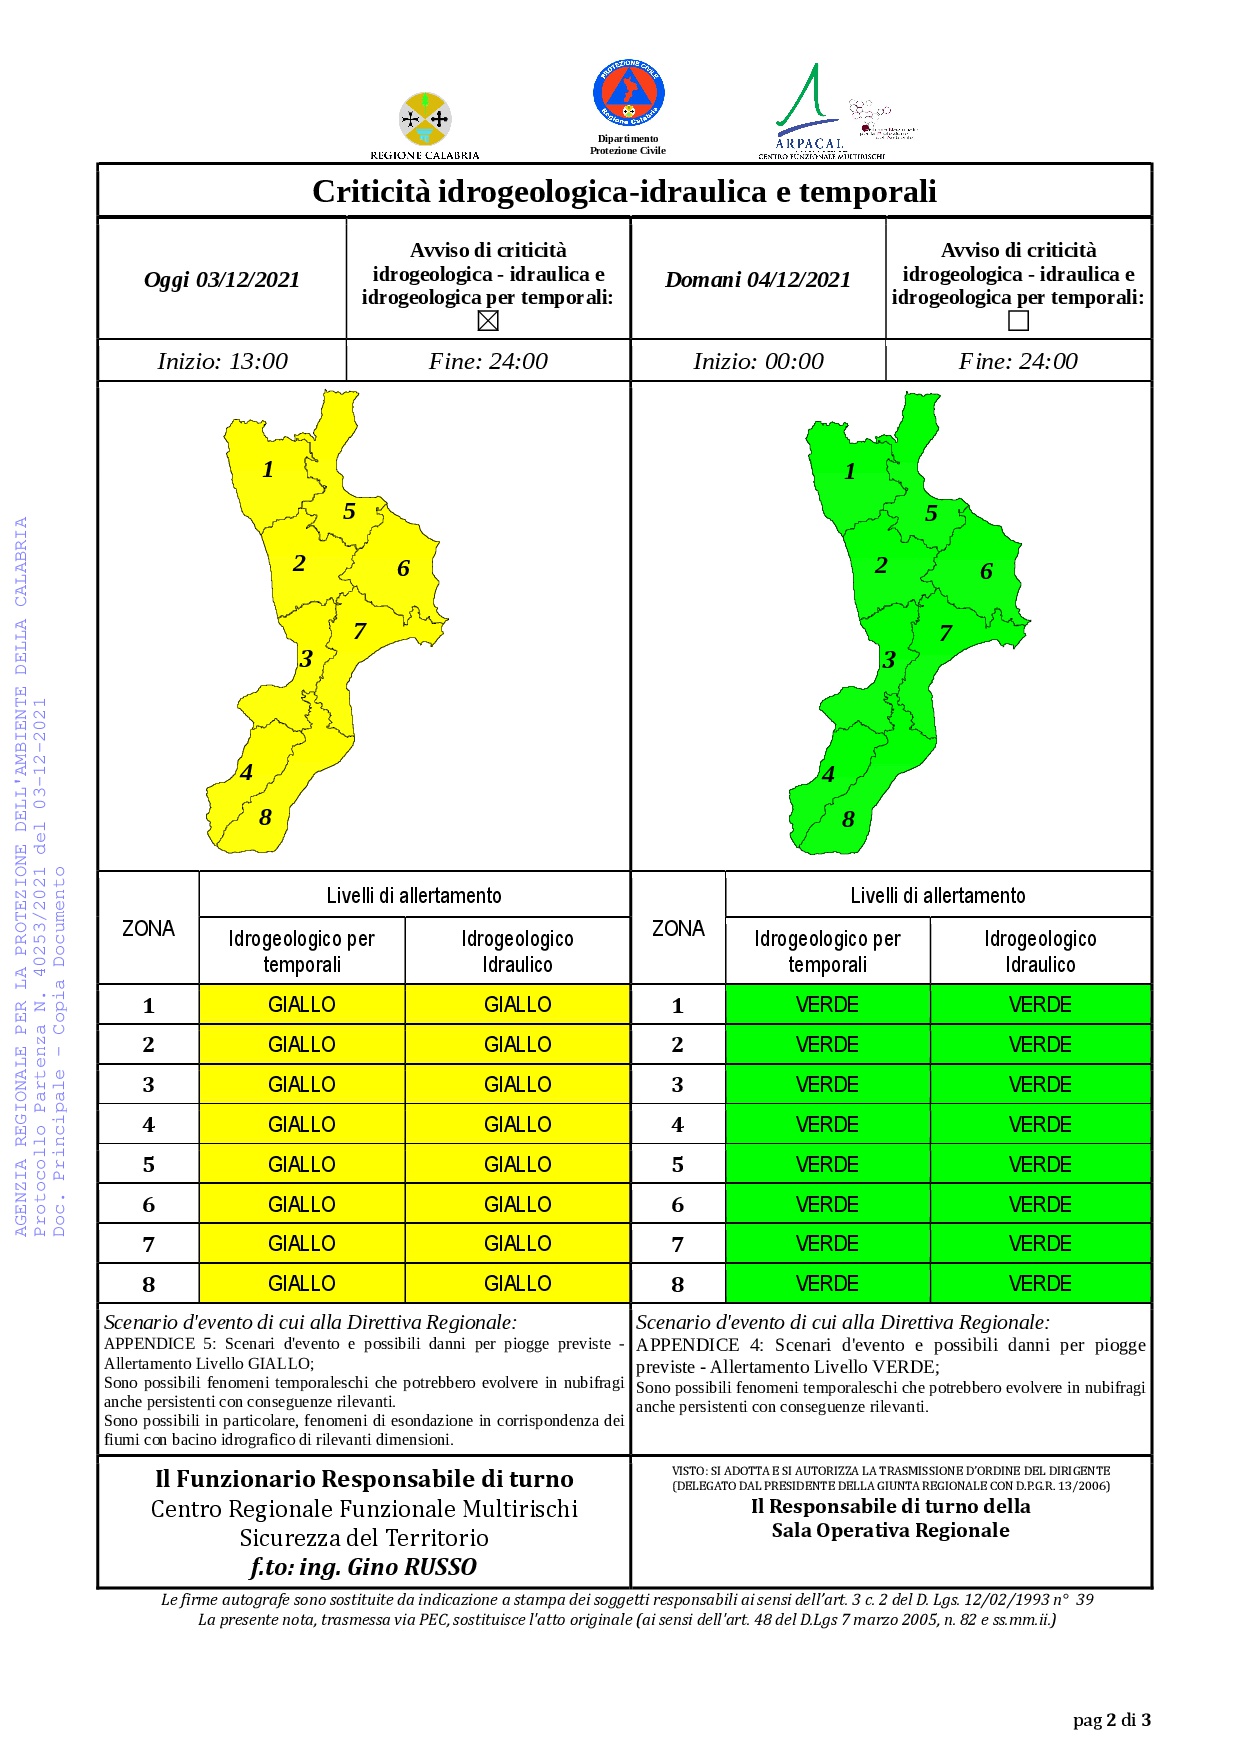 Criticità idrogeologica-idraulica e temporali in Calabria 03-12-2021